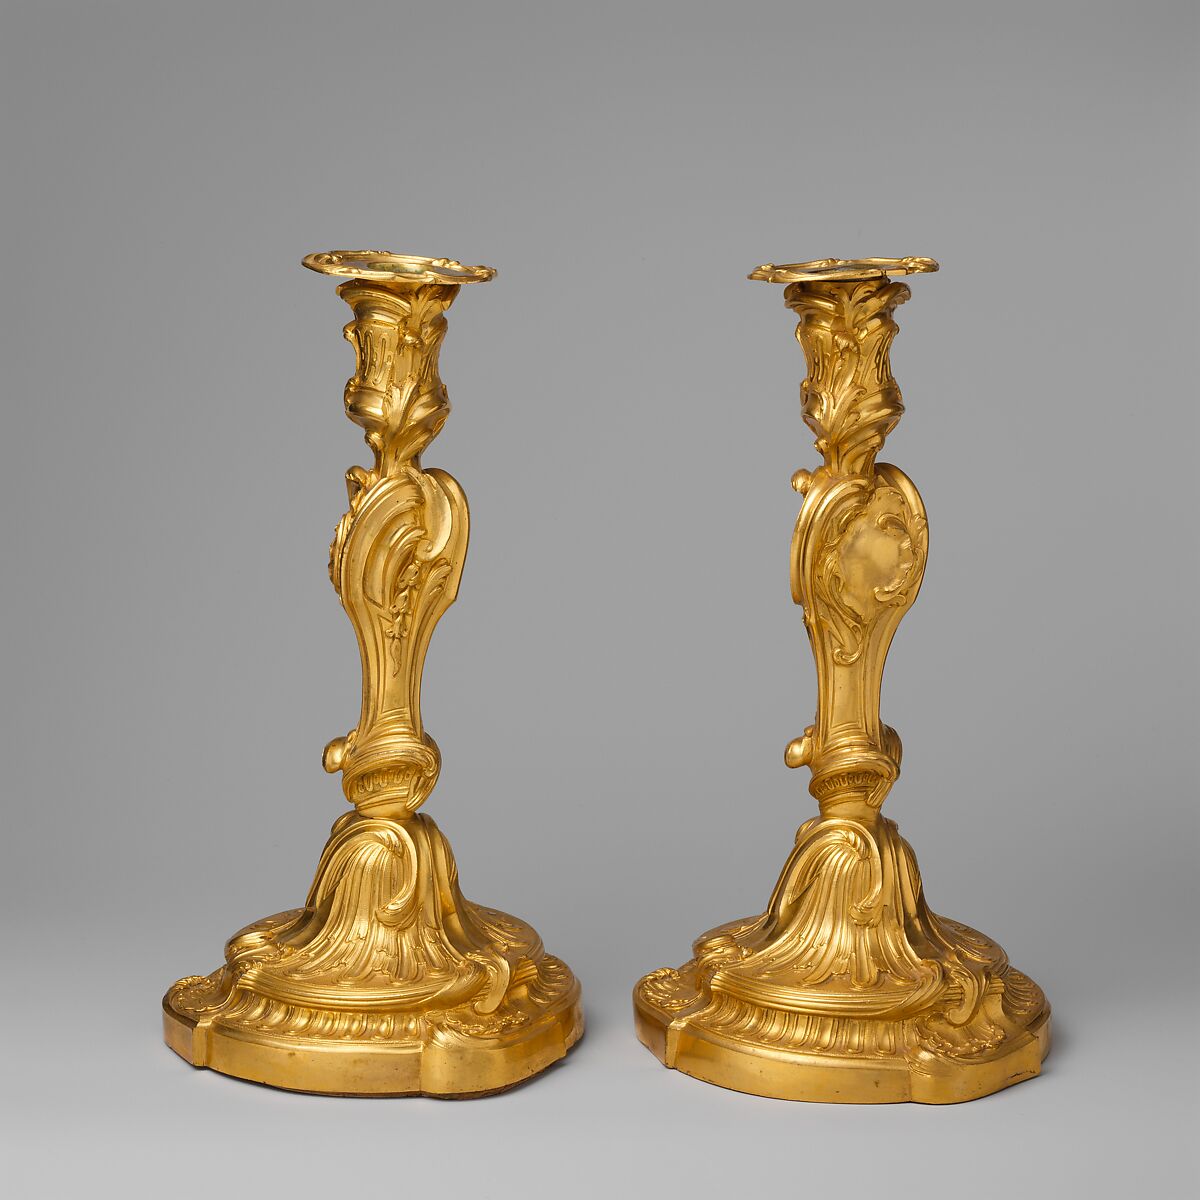 Pair of candlesticks, Manner of Juste Aurèle Meissonnier (French, Turin 1695–1750 Paris), Gilt bronze, French, Paris 